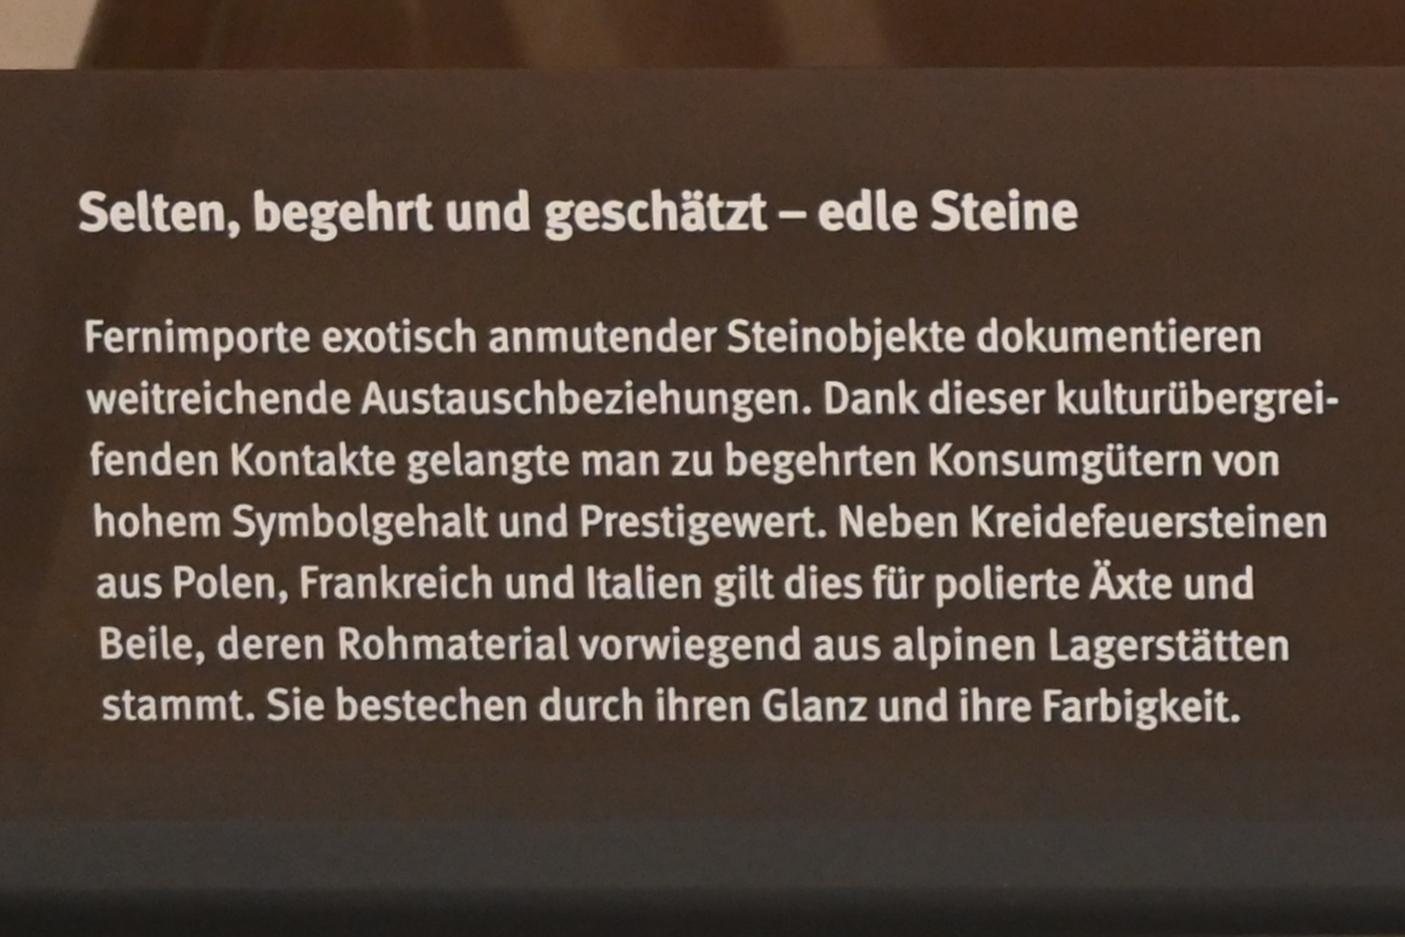 Spitznackiges Beil, Neolithikum (Jungsteinzeit), 5500 - 1700 v. Chr., 3800 - 2800 v. Chr., Bild 3/3